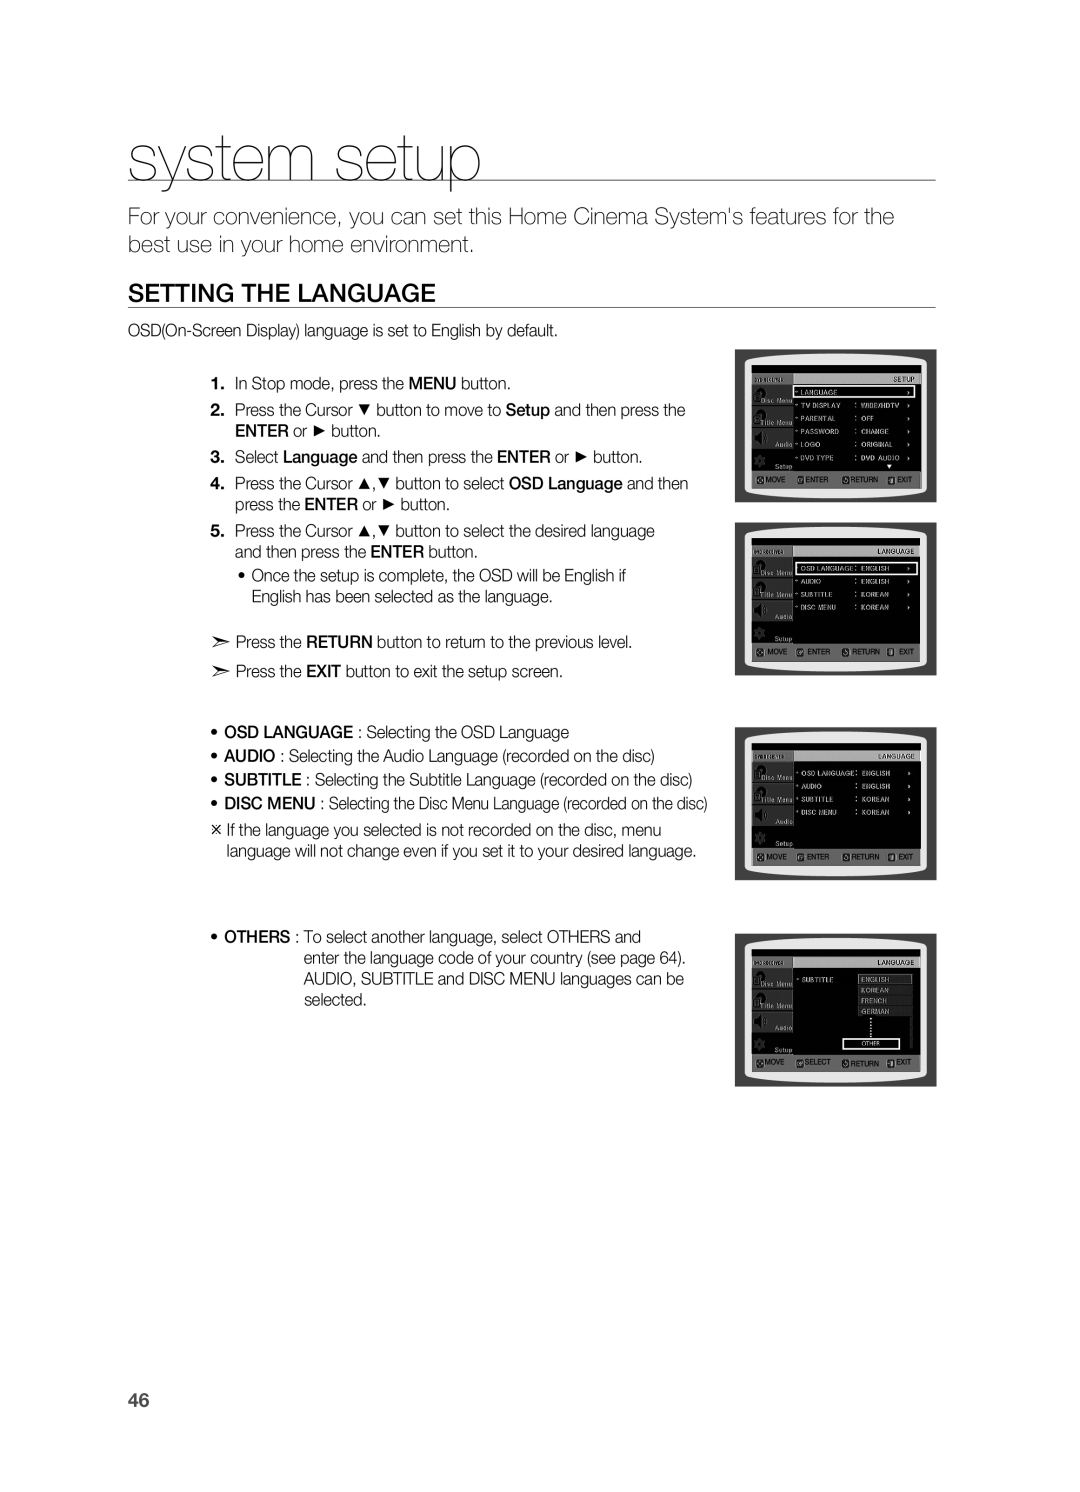 Samsung HT-TX715 user manual system setup, Setting the Language 